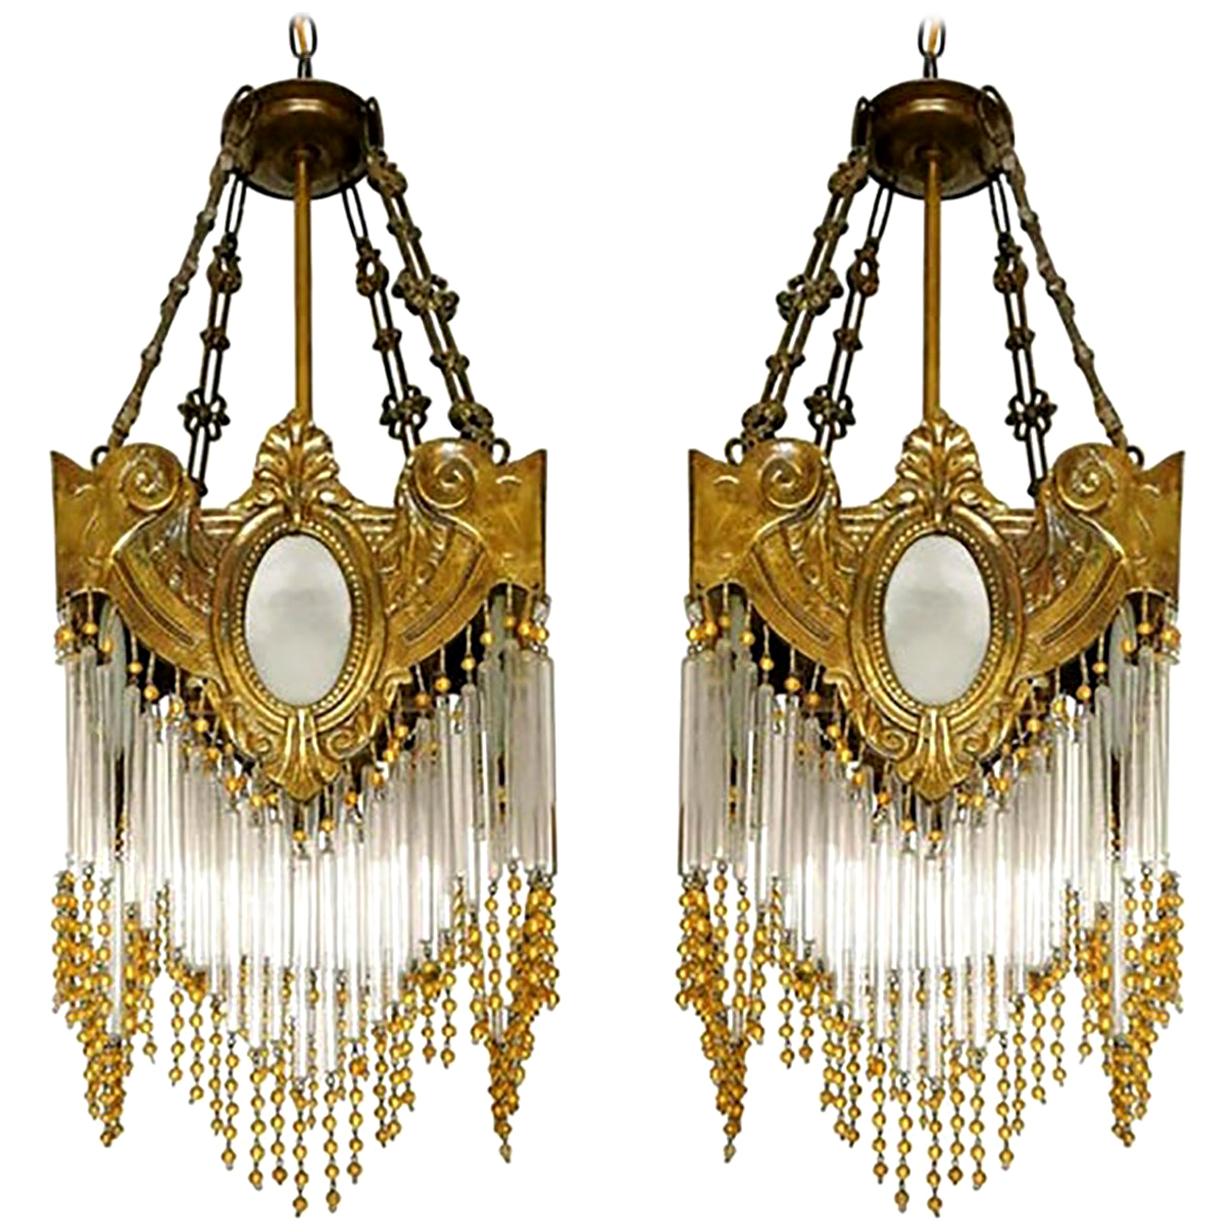 Pair of French Art Nouveau Art Deco Gilt Bronze Amber Beaded Fringe Chandeliers